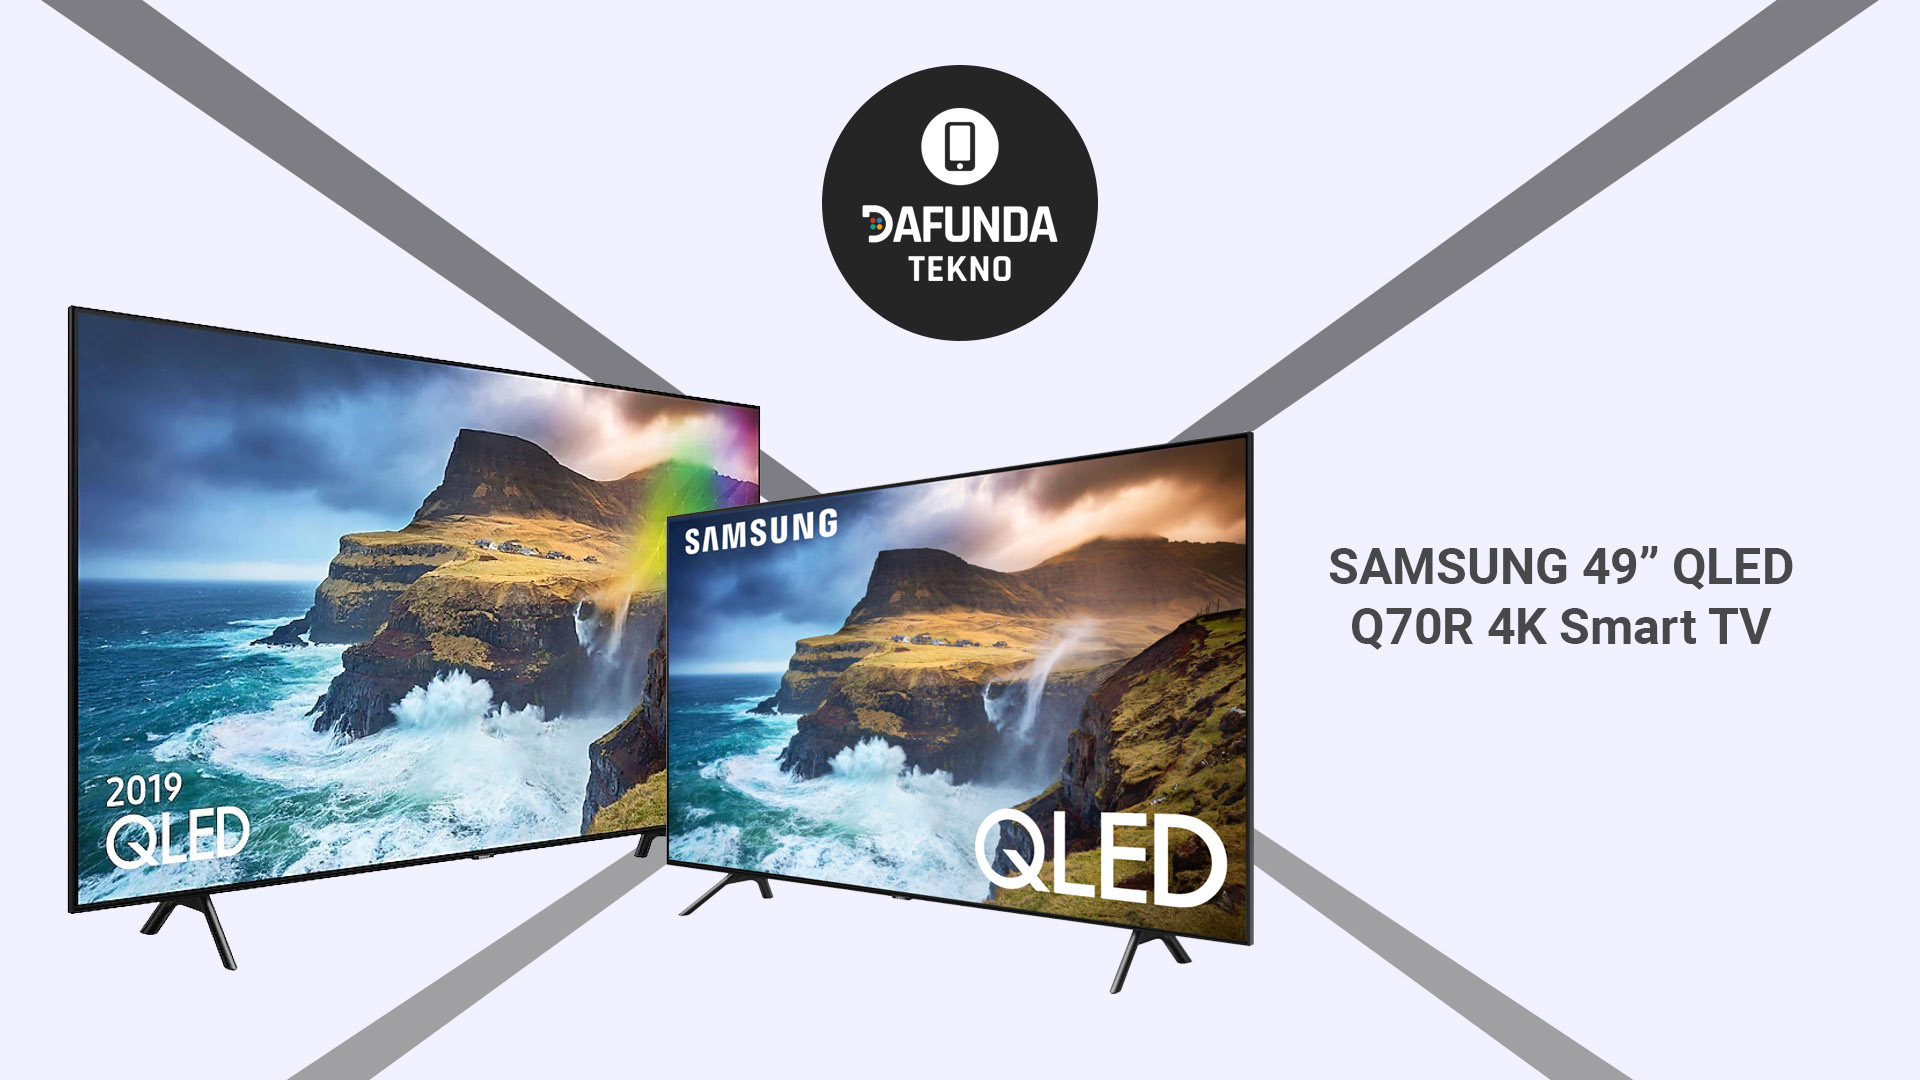 Samsung 49” Qled Q70r 4k Smart Tv